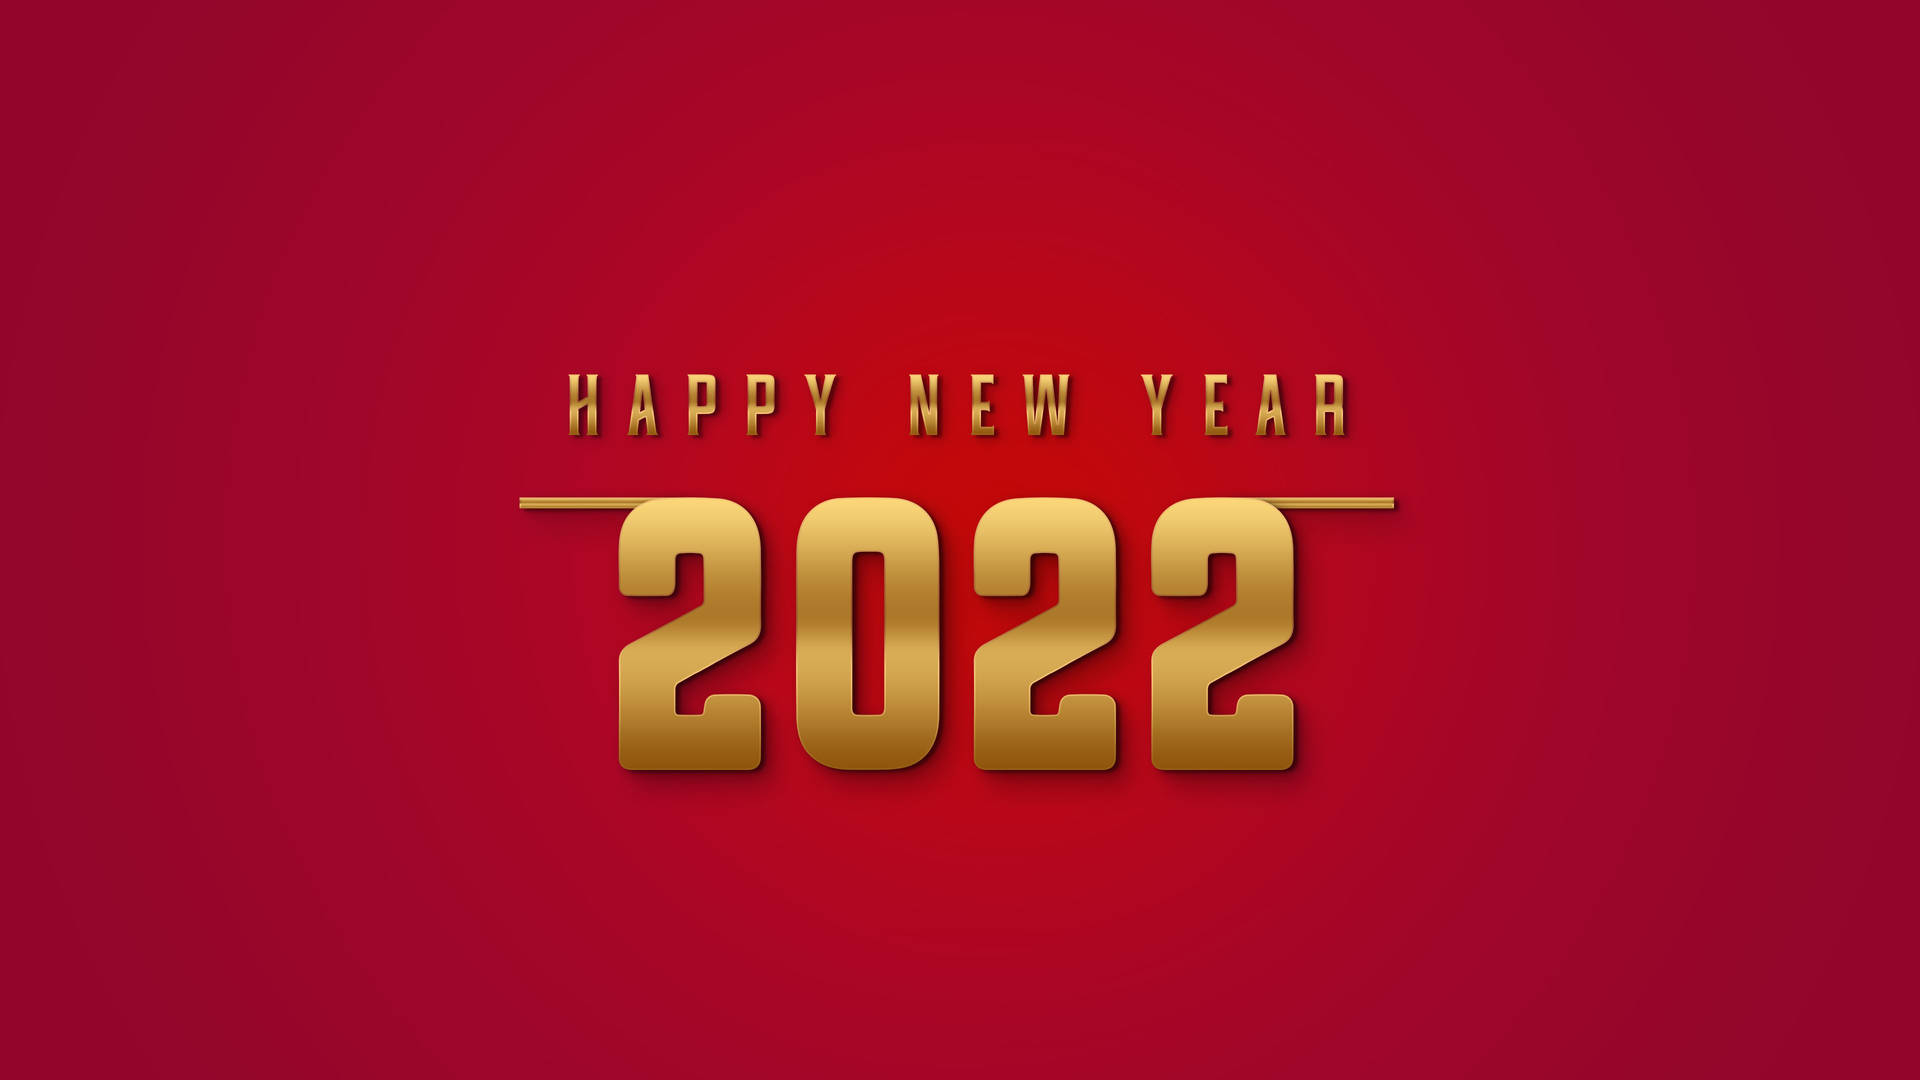 Celebrate Great Beginnings - Happy New Year 2022 Wallpaper